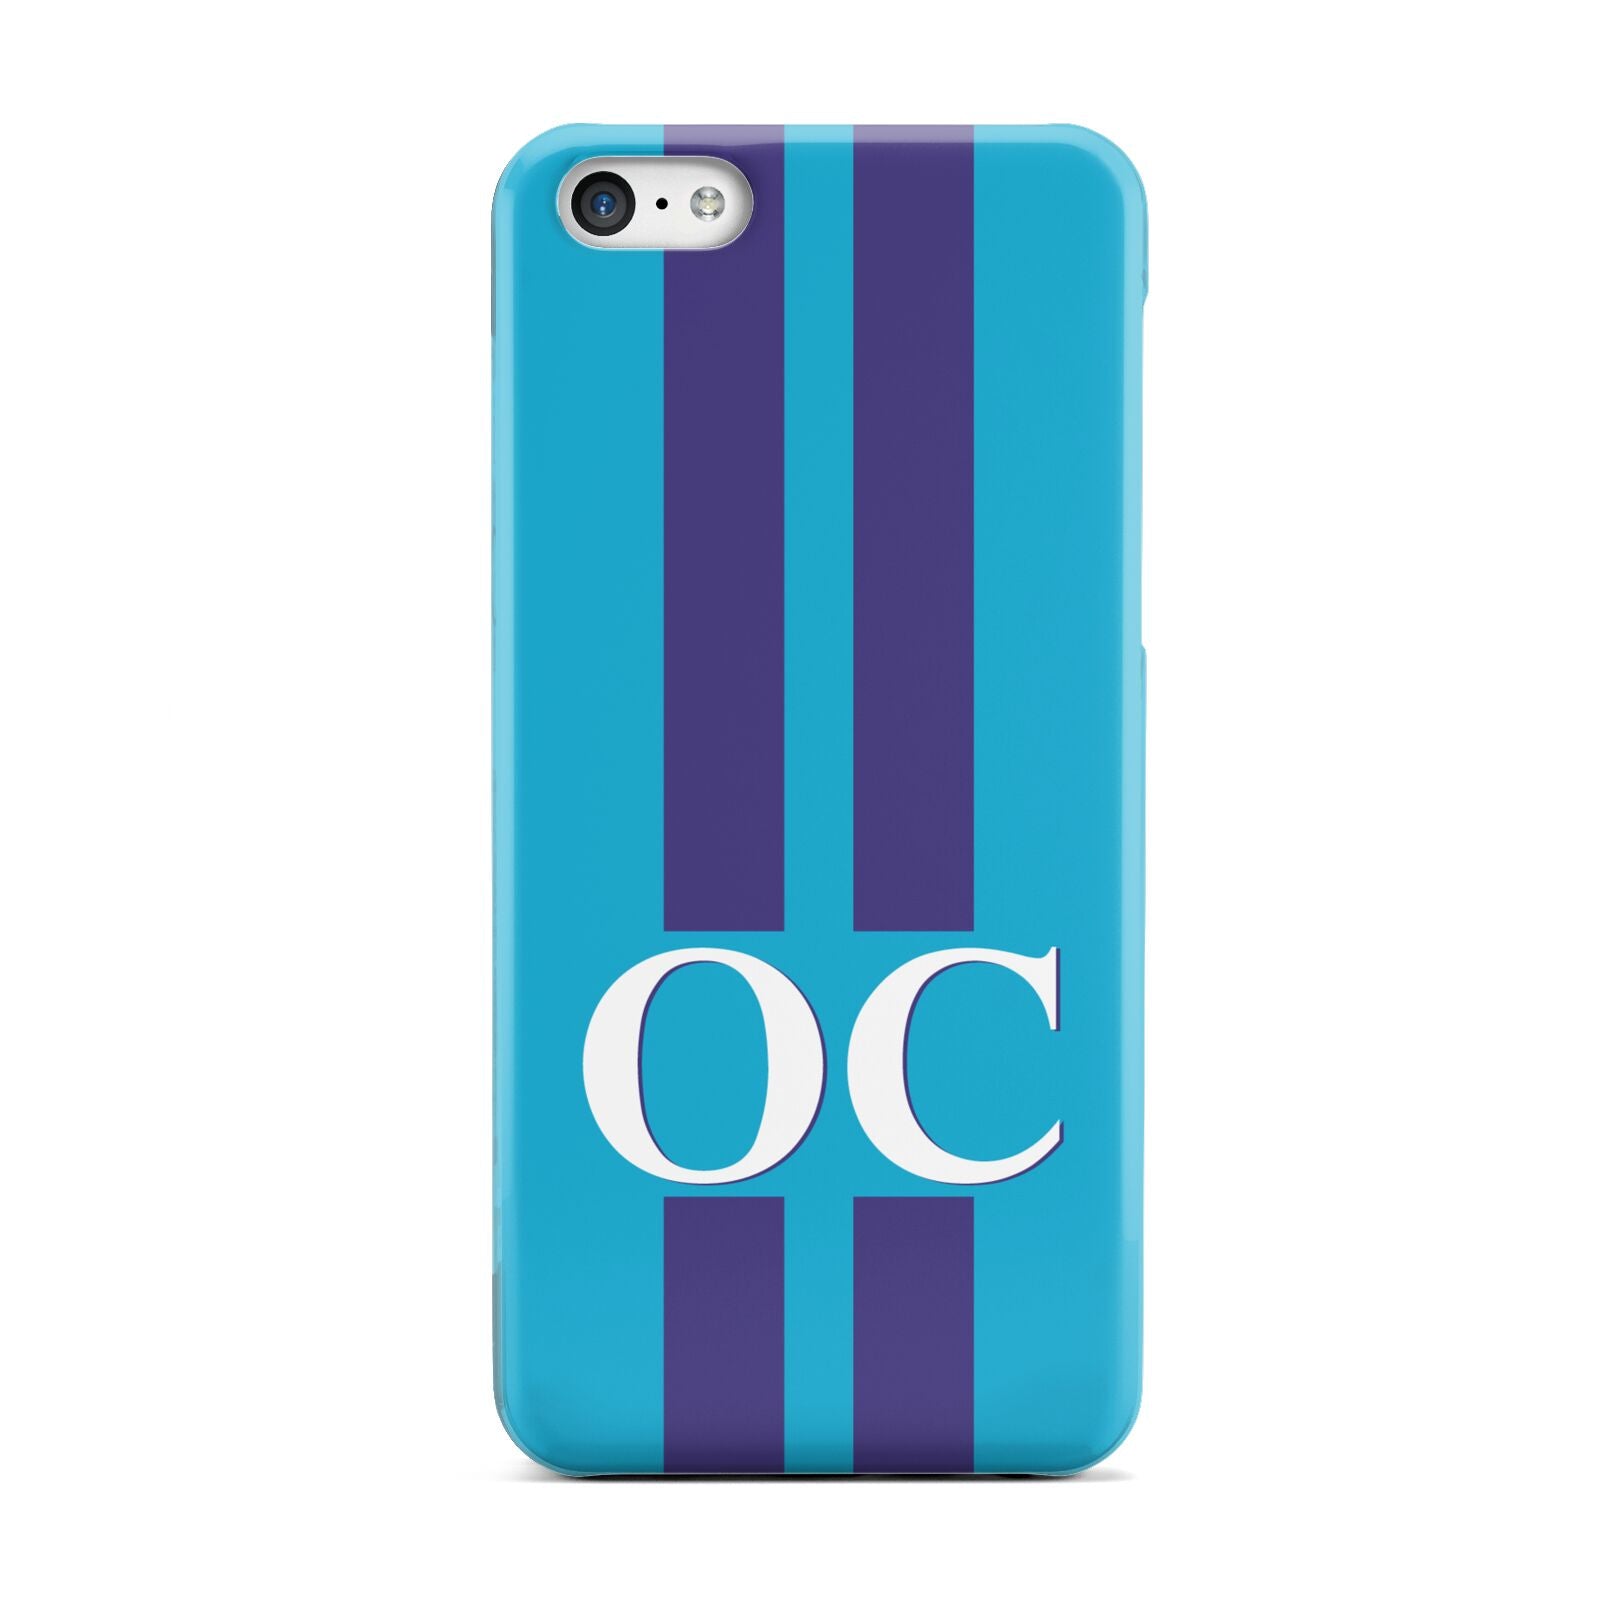 Turquoise Personalised Apple iPhone 5c Case